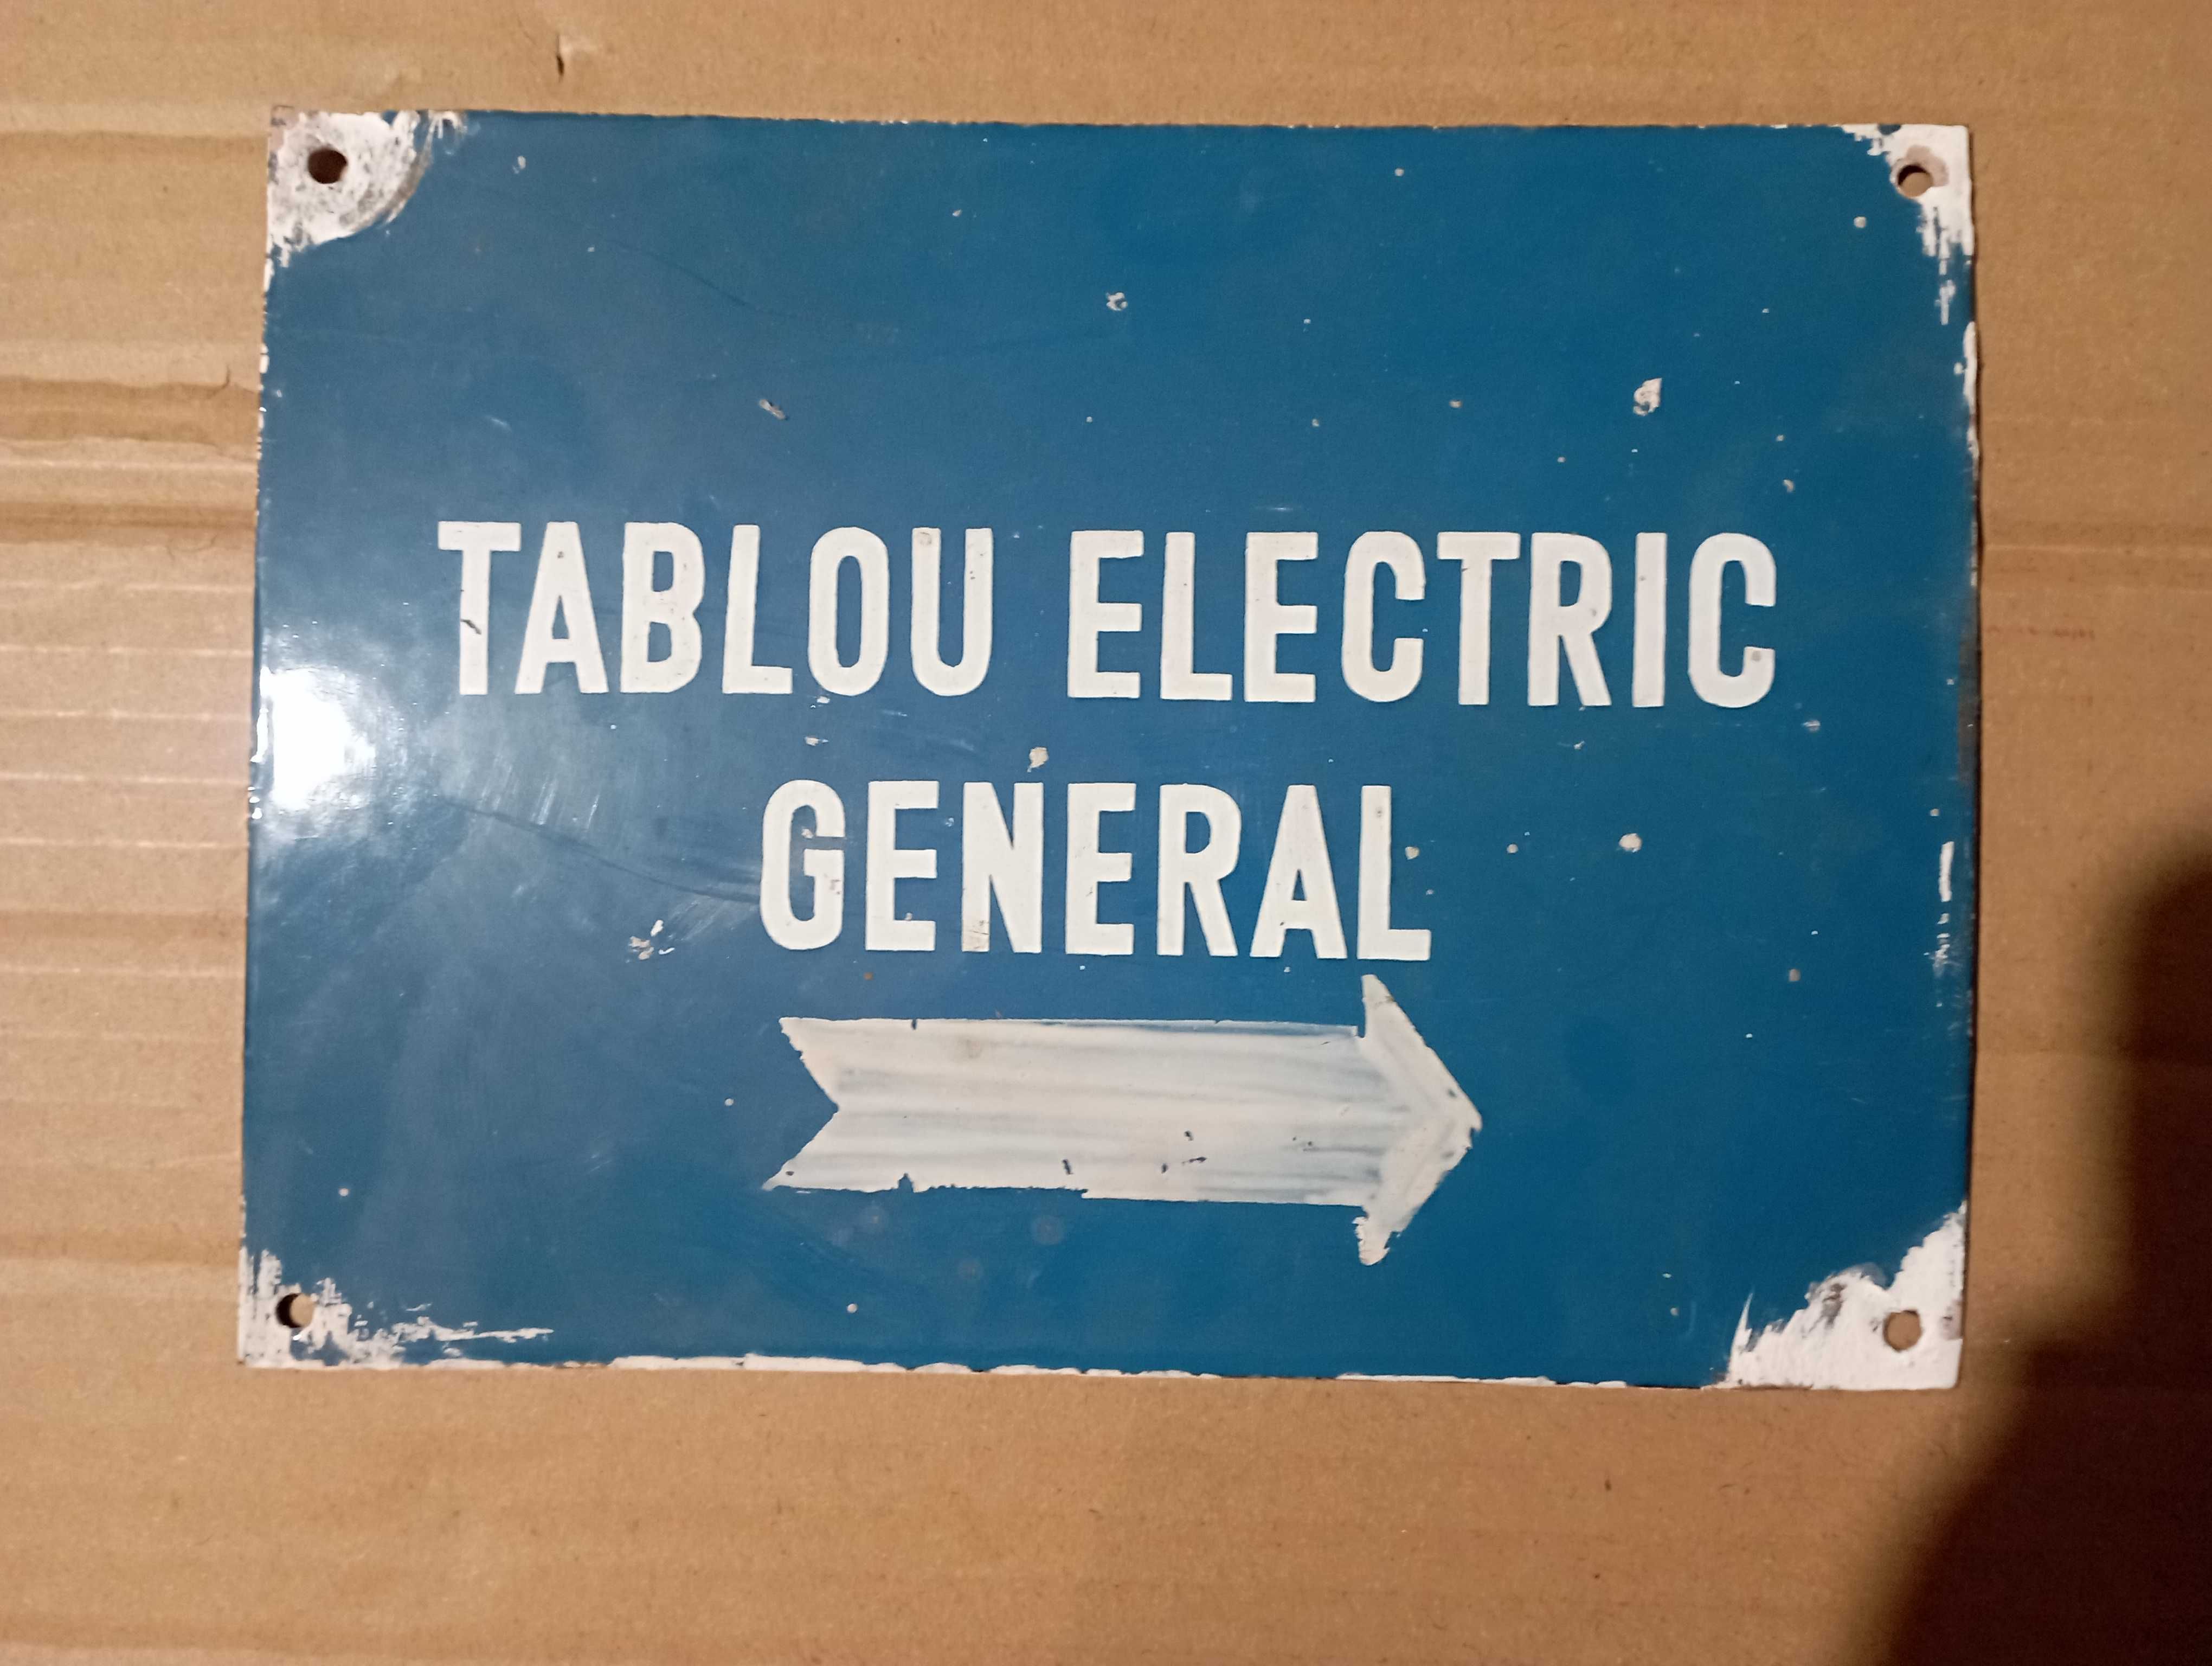 Tablou Electric - Tabla Protectia Muncii, emailata, perioada comunista